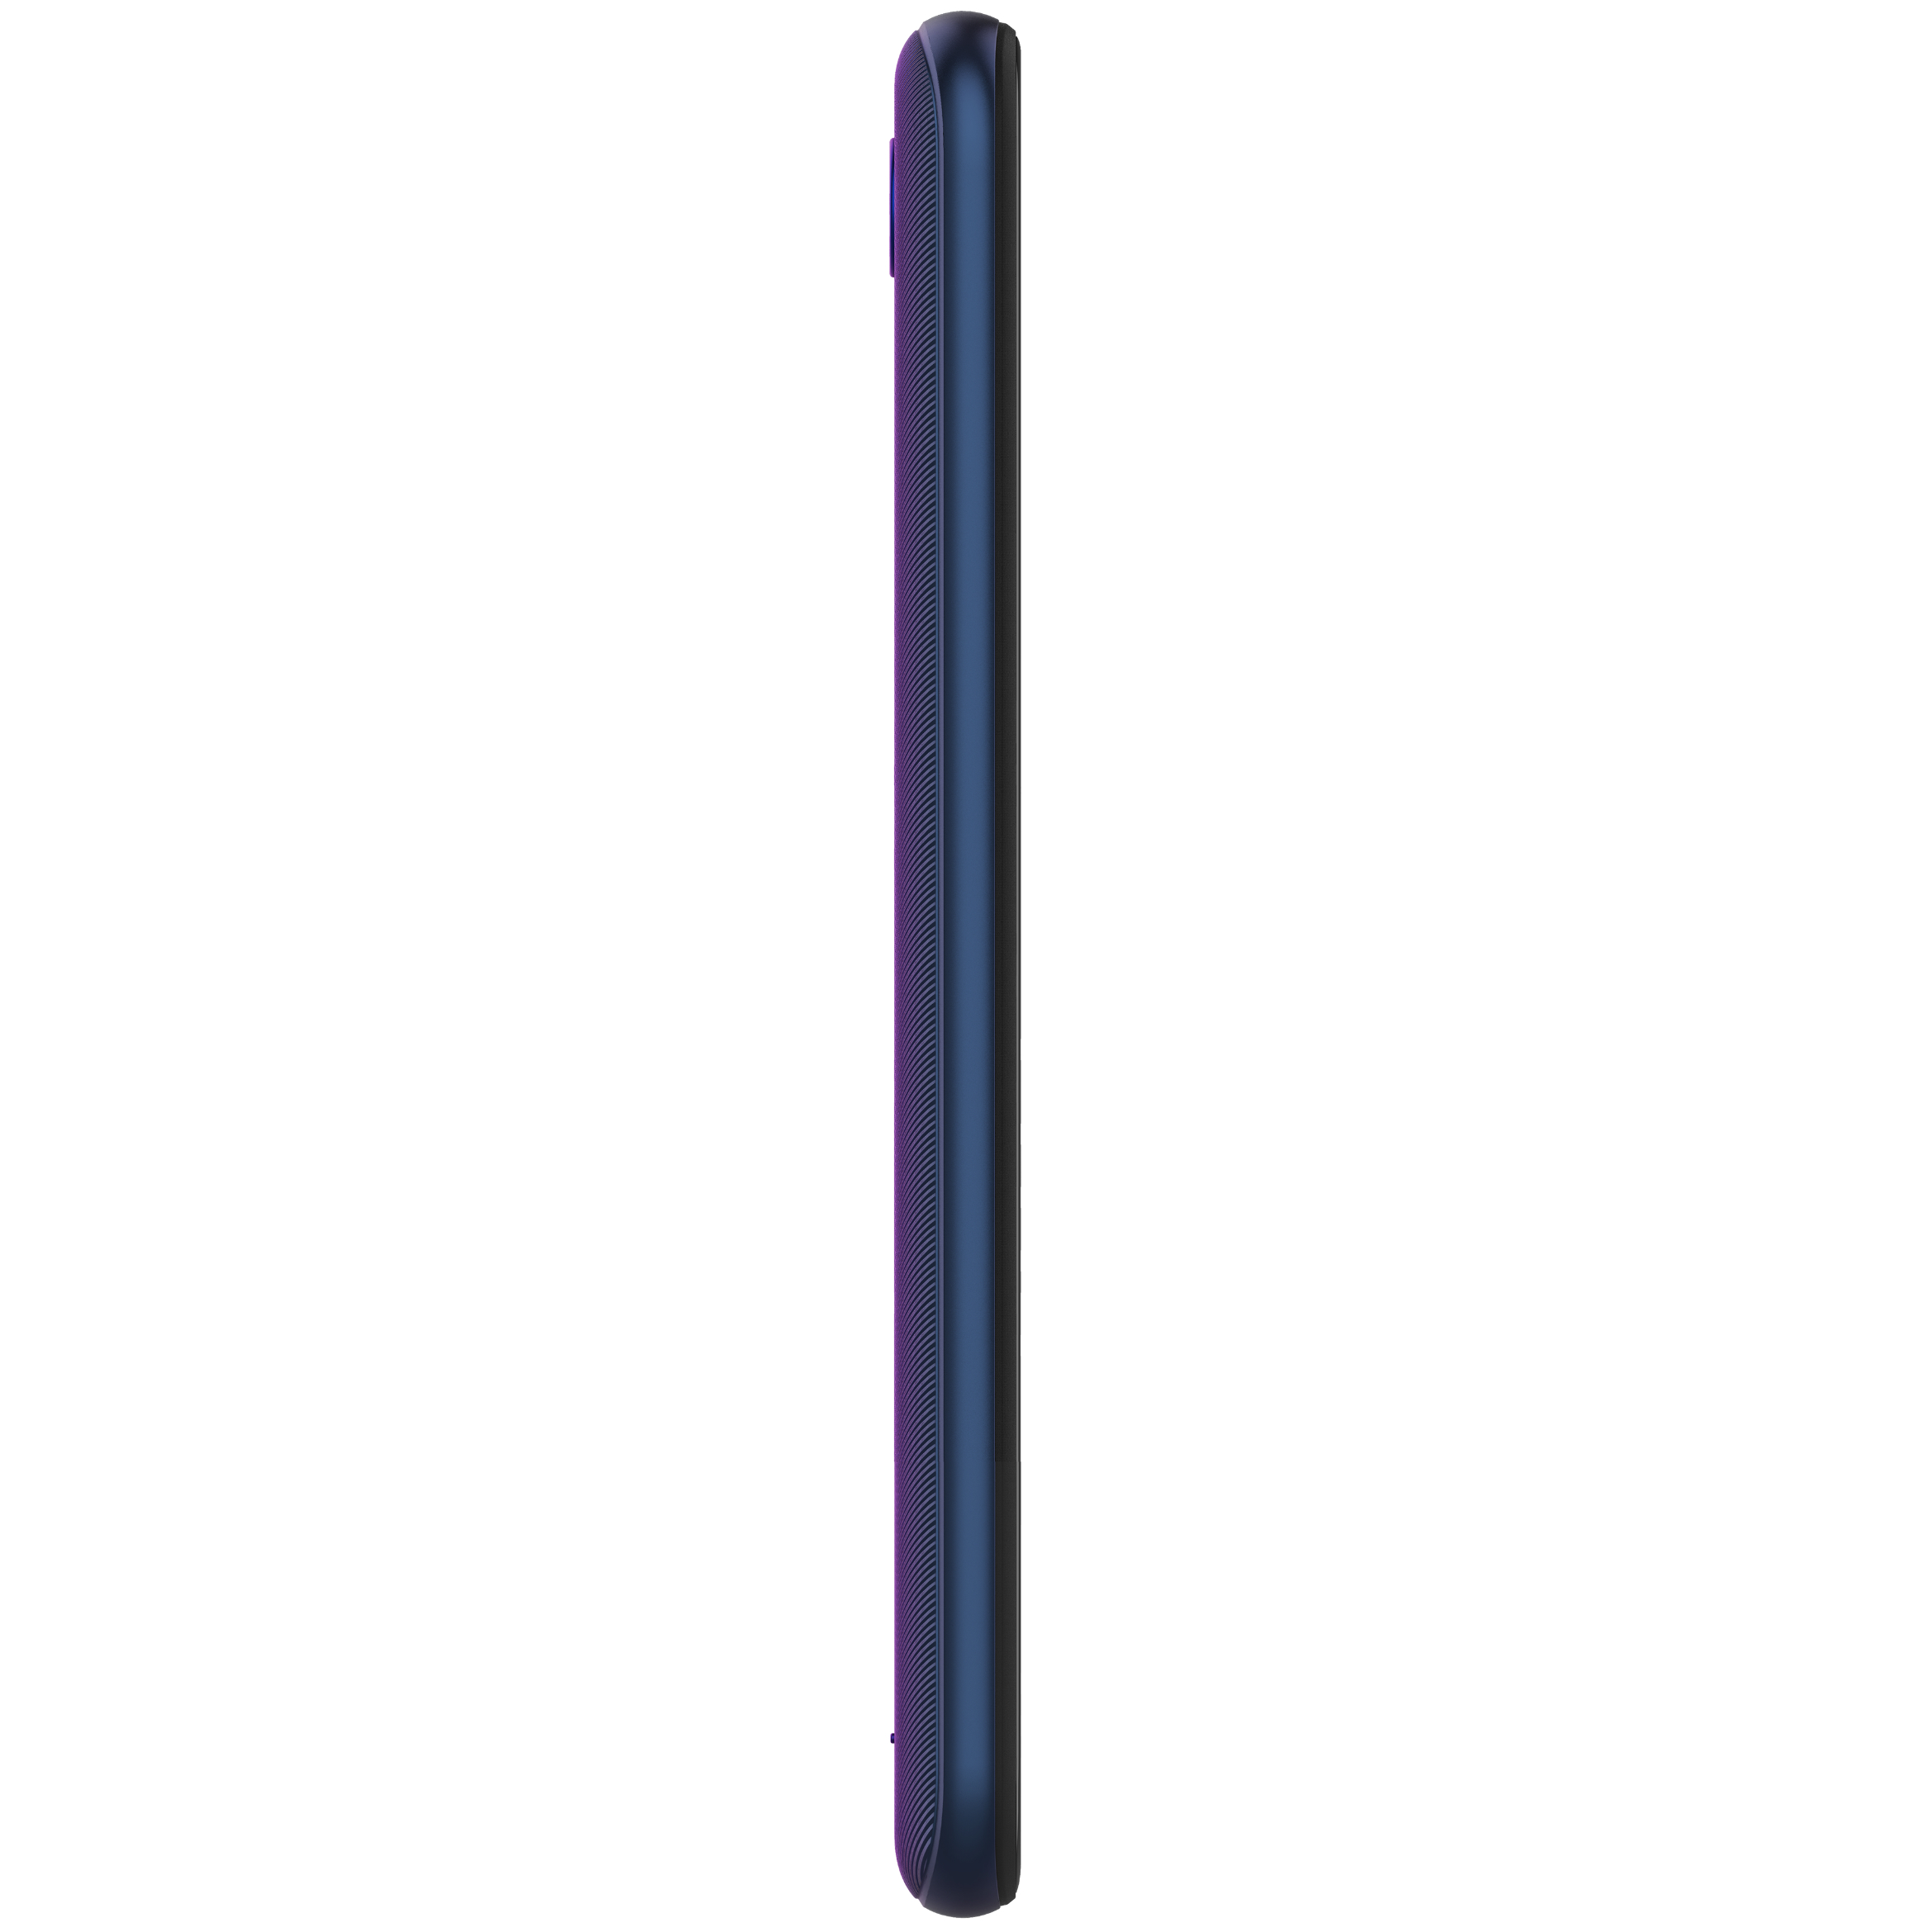 AT&T Calypso, 16GB, Chameleon Blue - Prepaid Smartphone - image 9 of 19